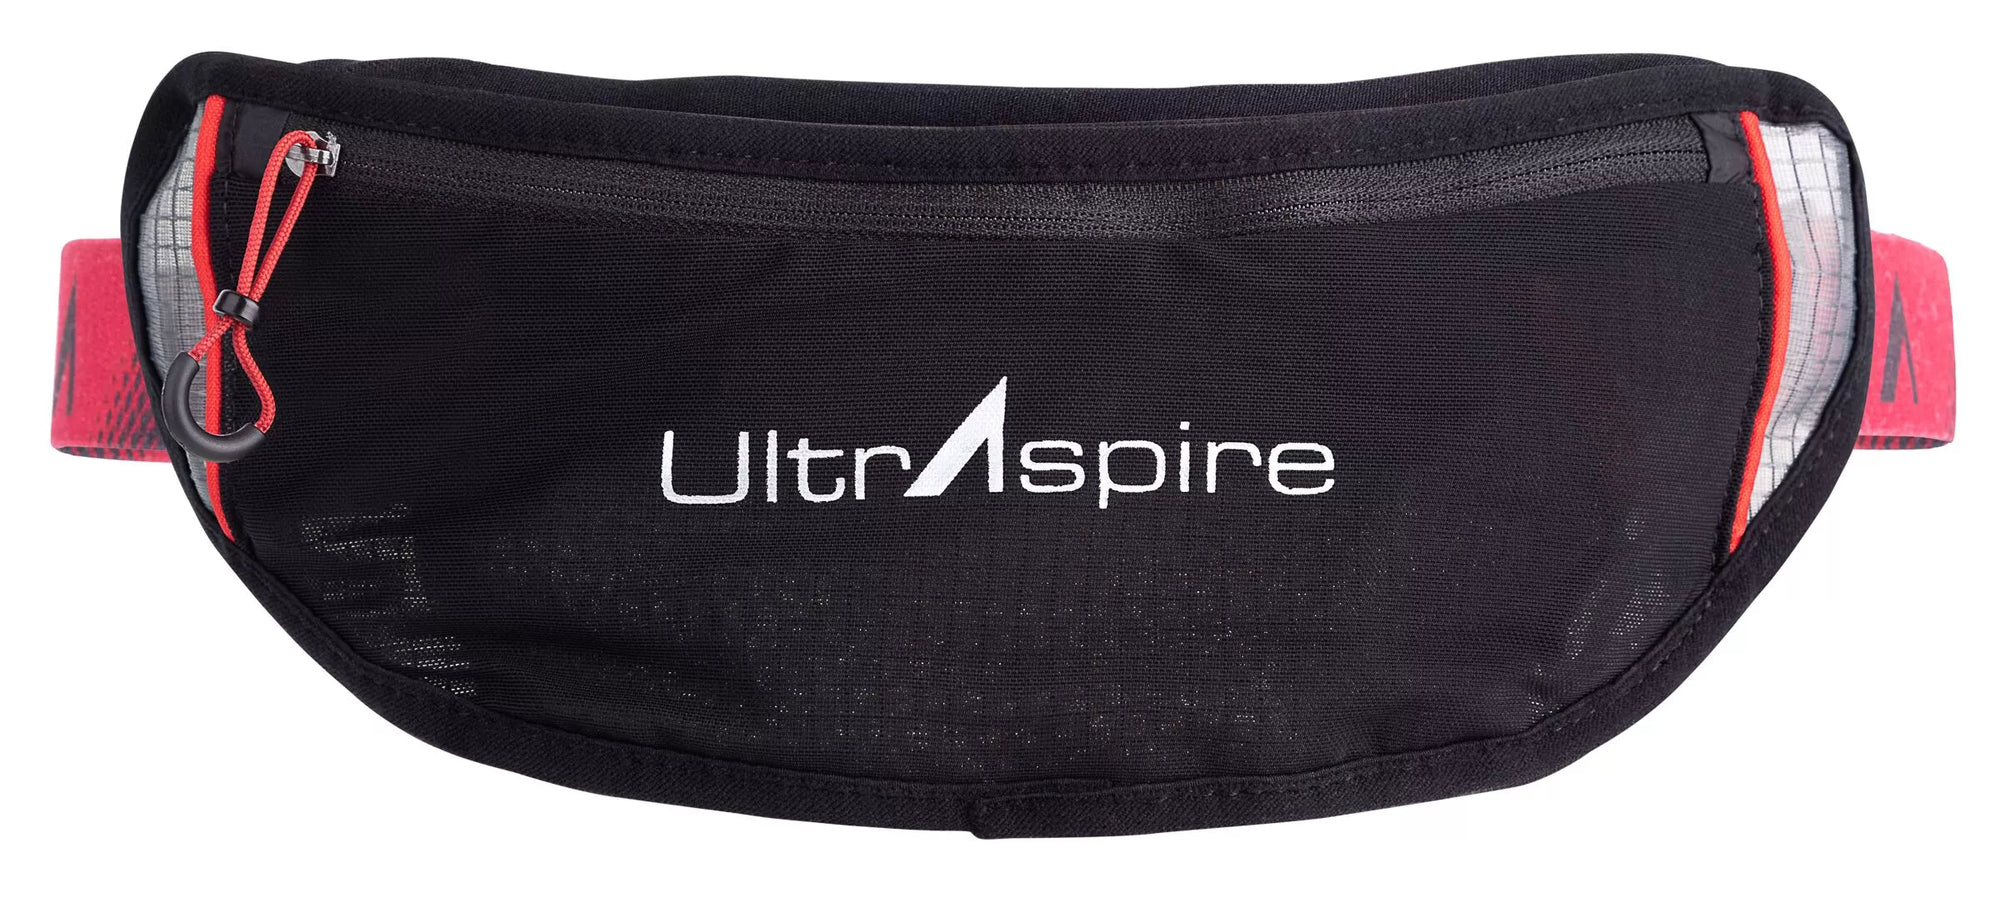 the ultraspire lumen 600 4.0 waistlight showing the zipper pouch